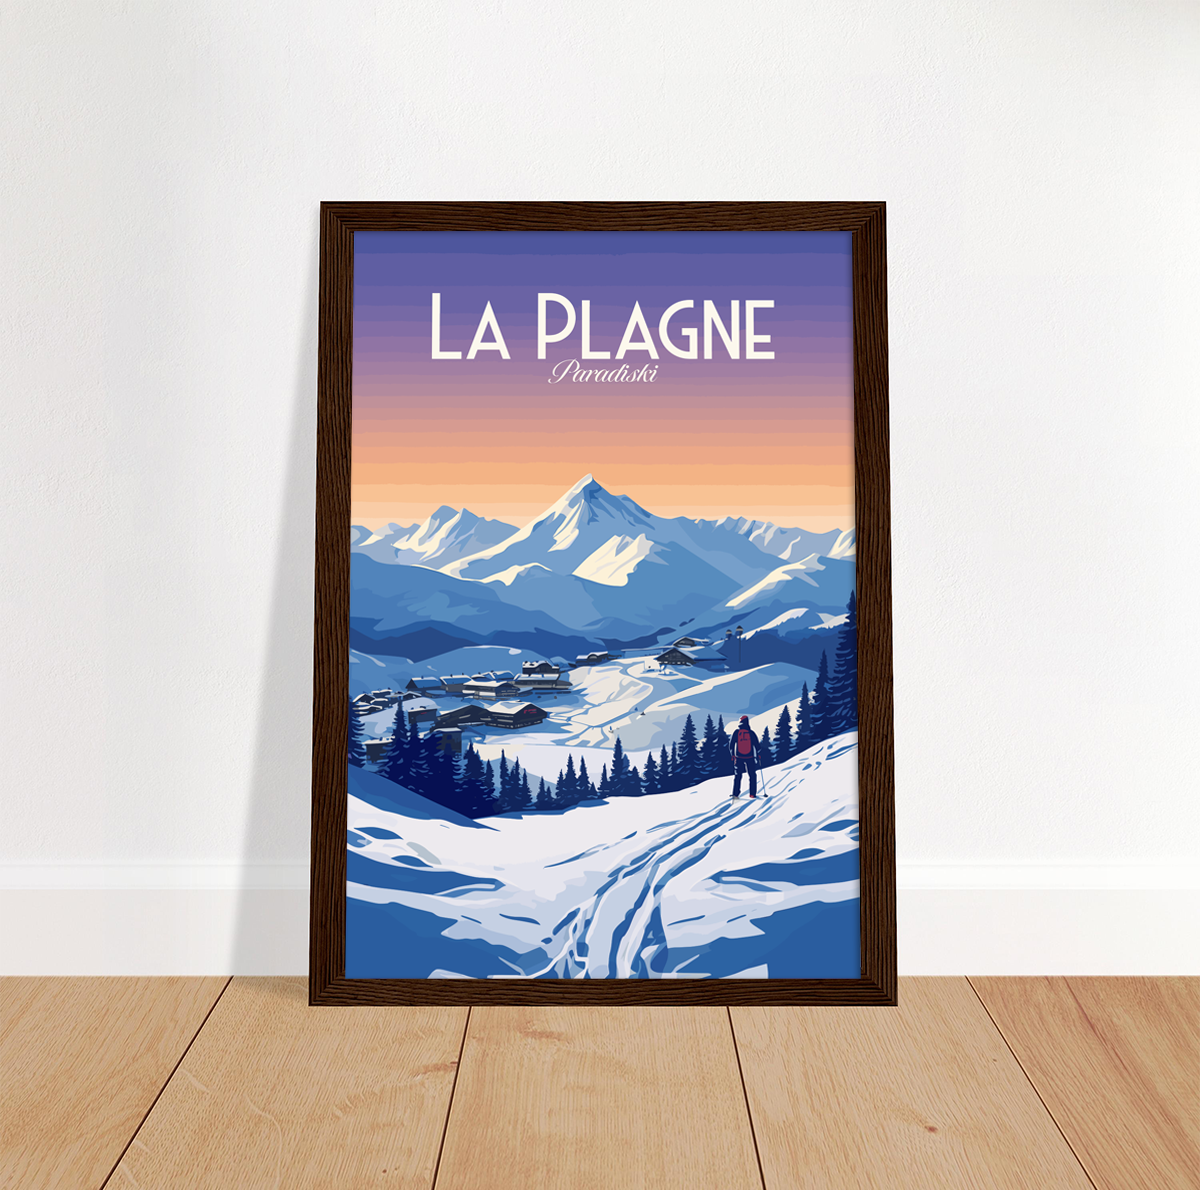 La Plagne poster by bon voyage design